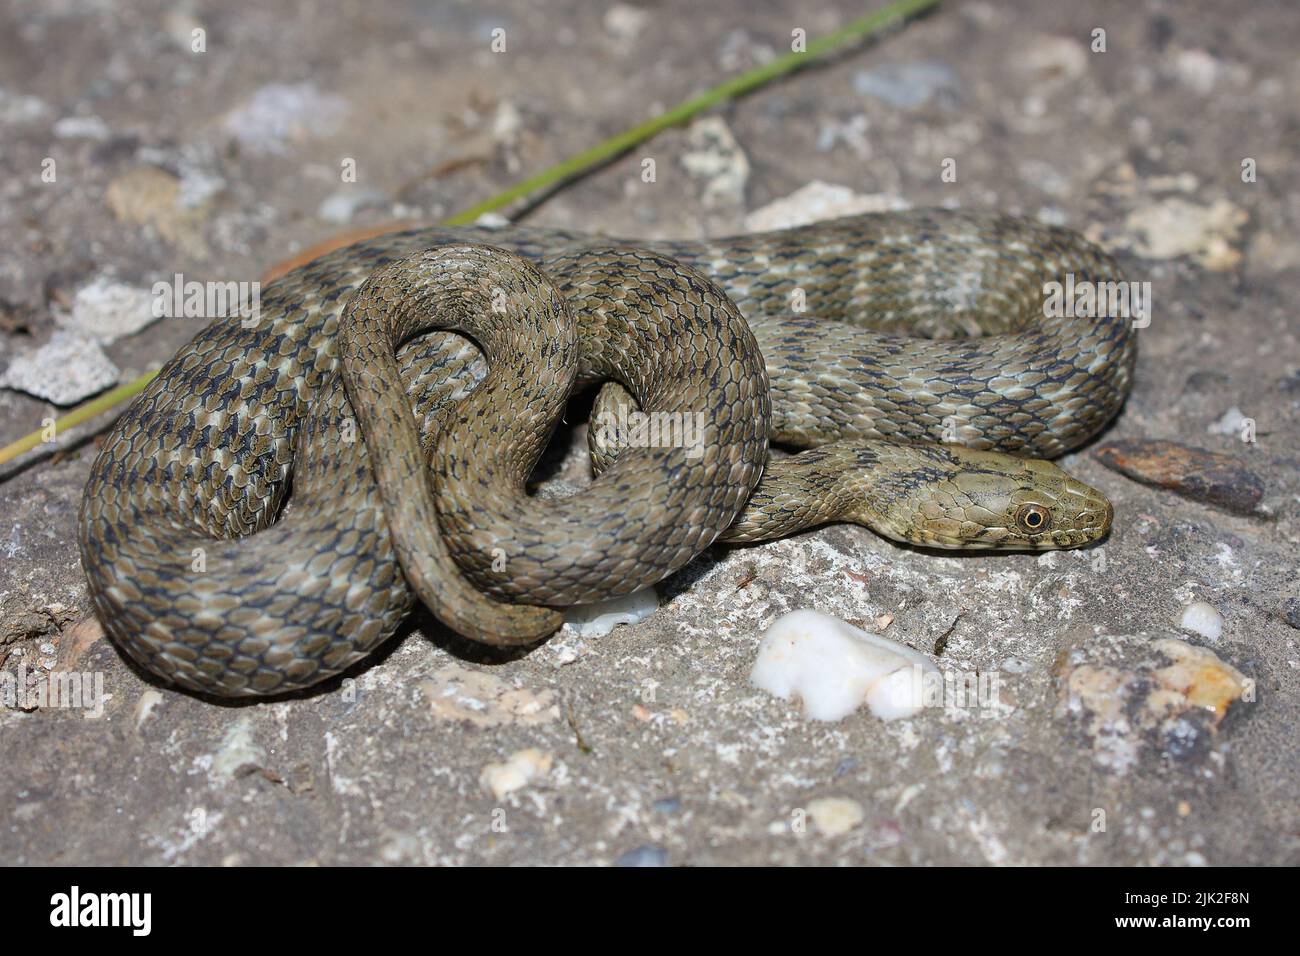 dice snake (Natrix tessellata) in natural habitat Stock Photo